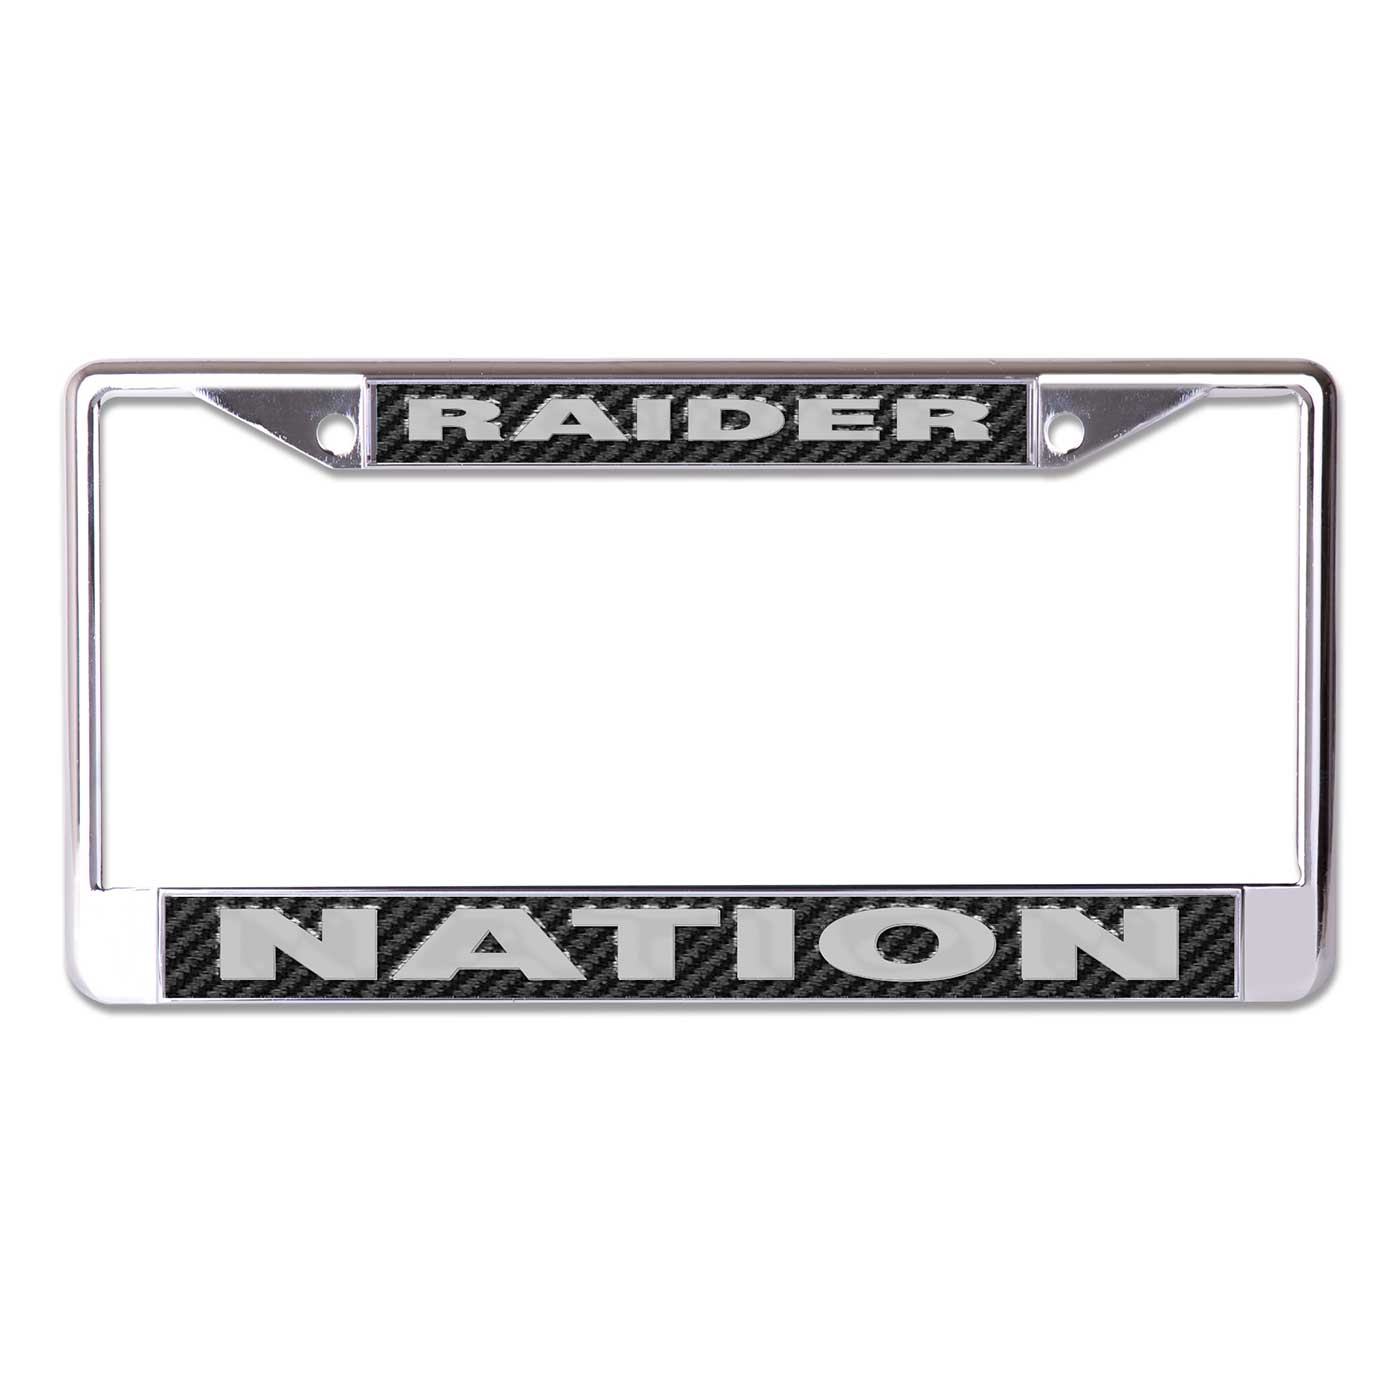 Raiders License Plate Frame Custom Made of Chrome Plated 